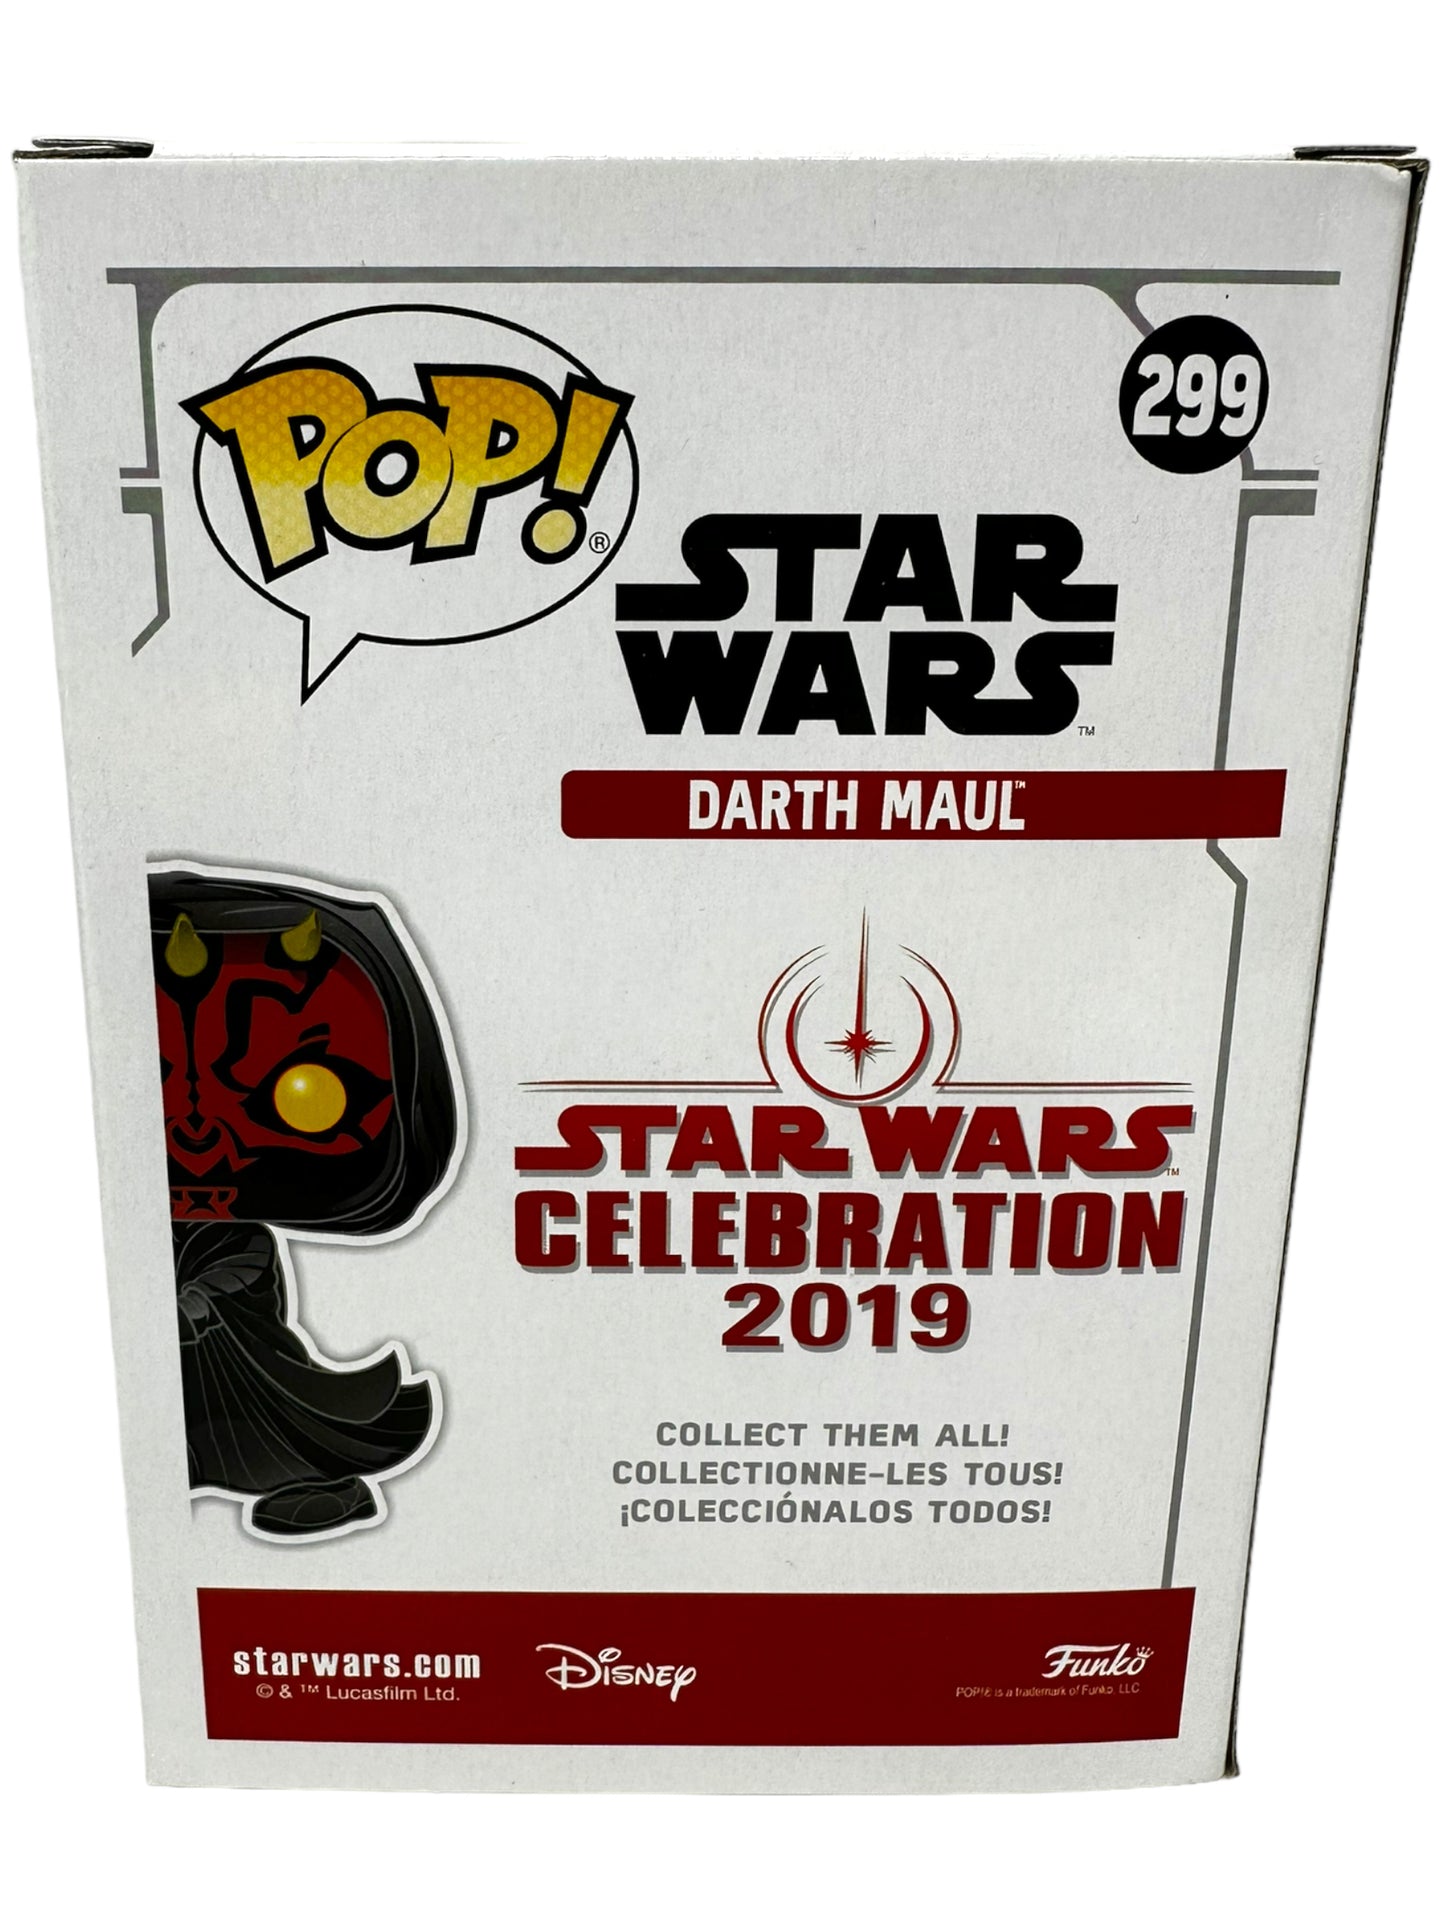 Sold 2019 Star Wars Celebrations Darth Maul 299